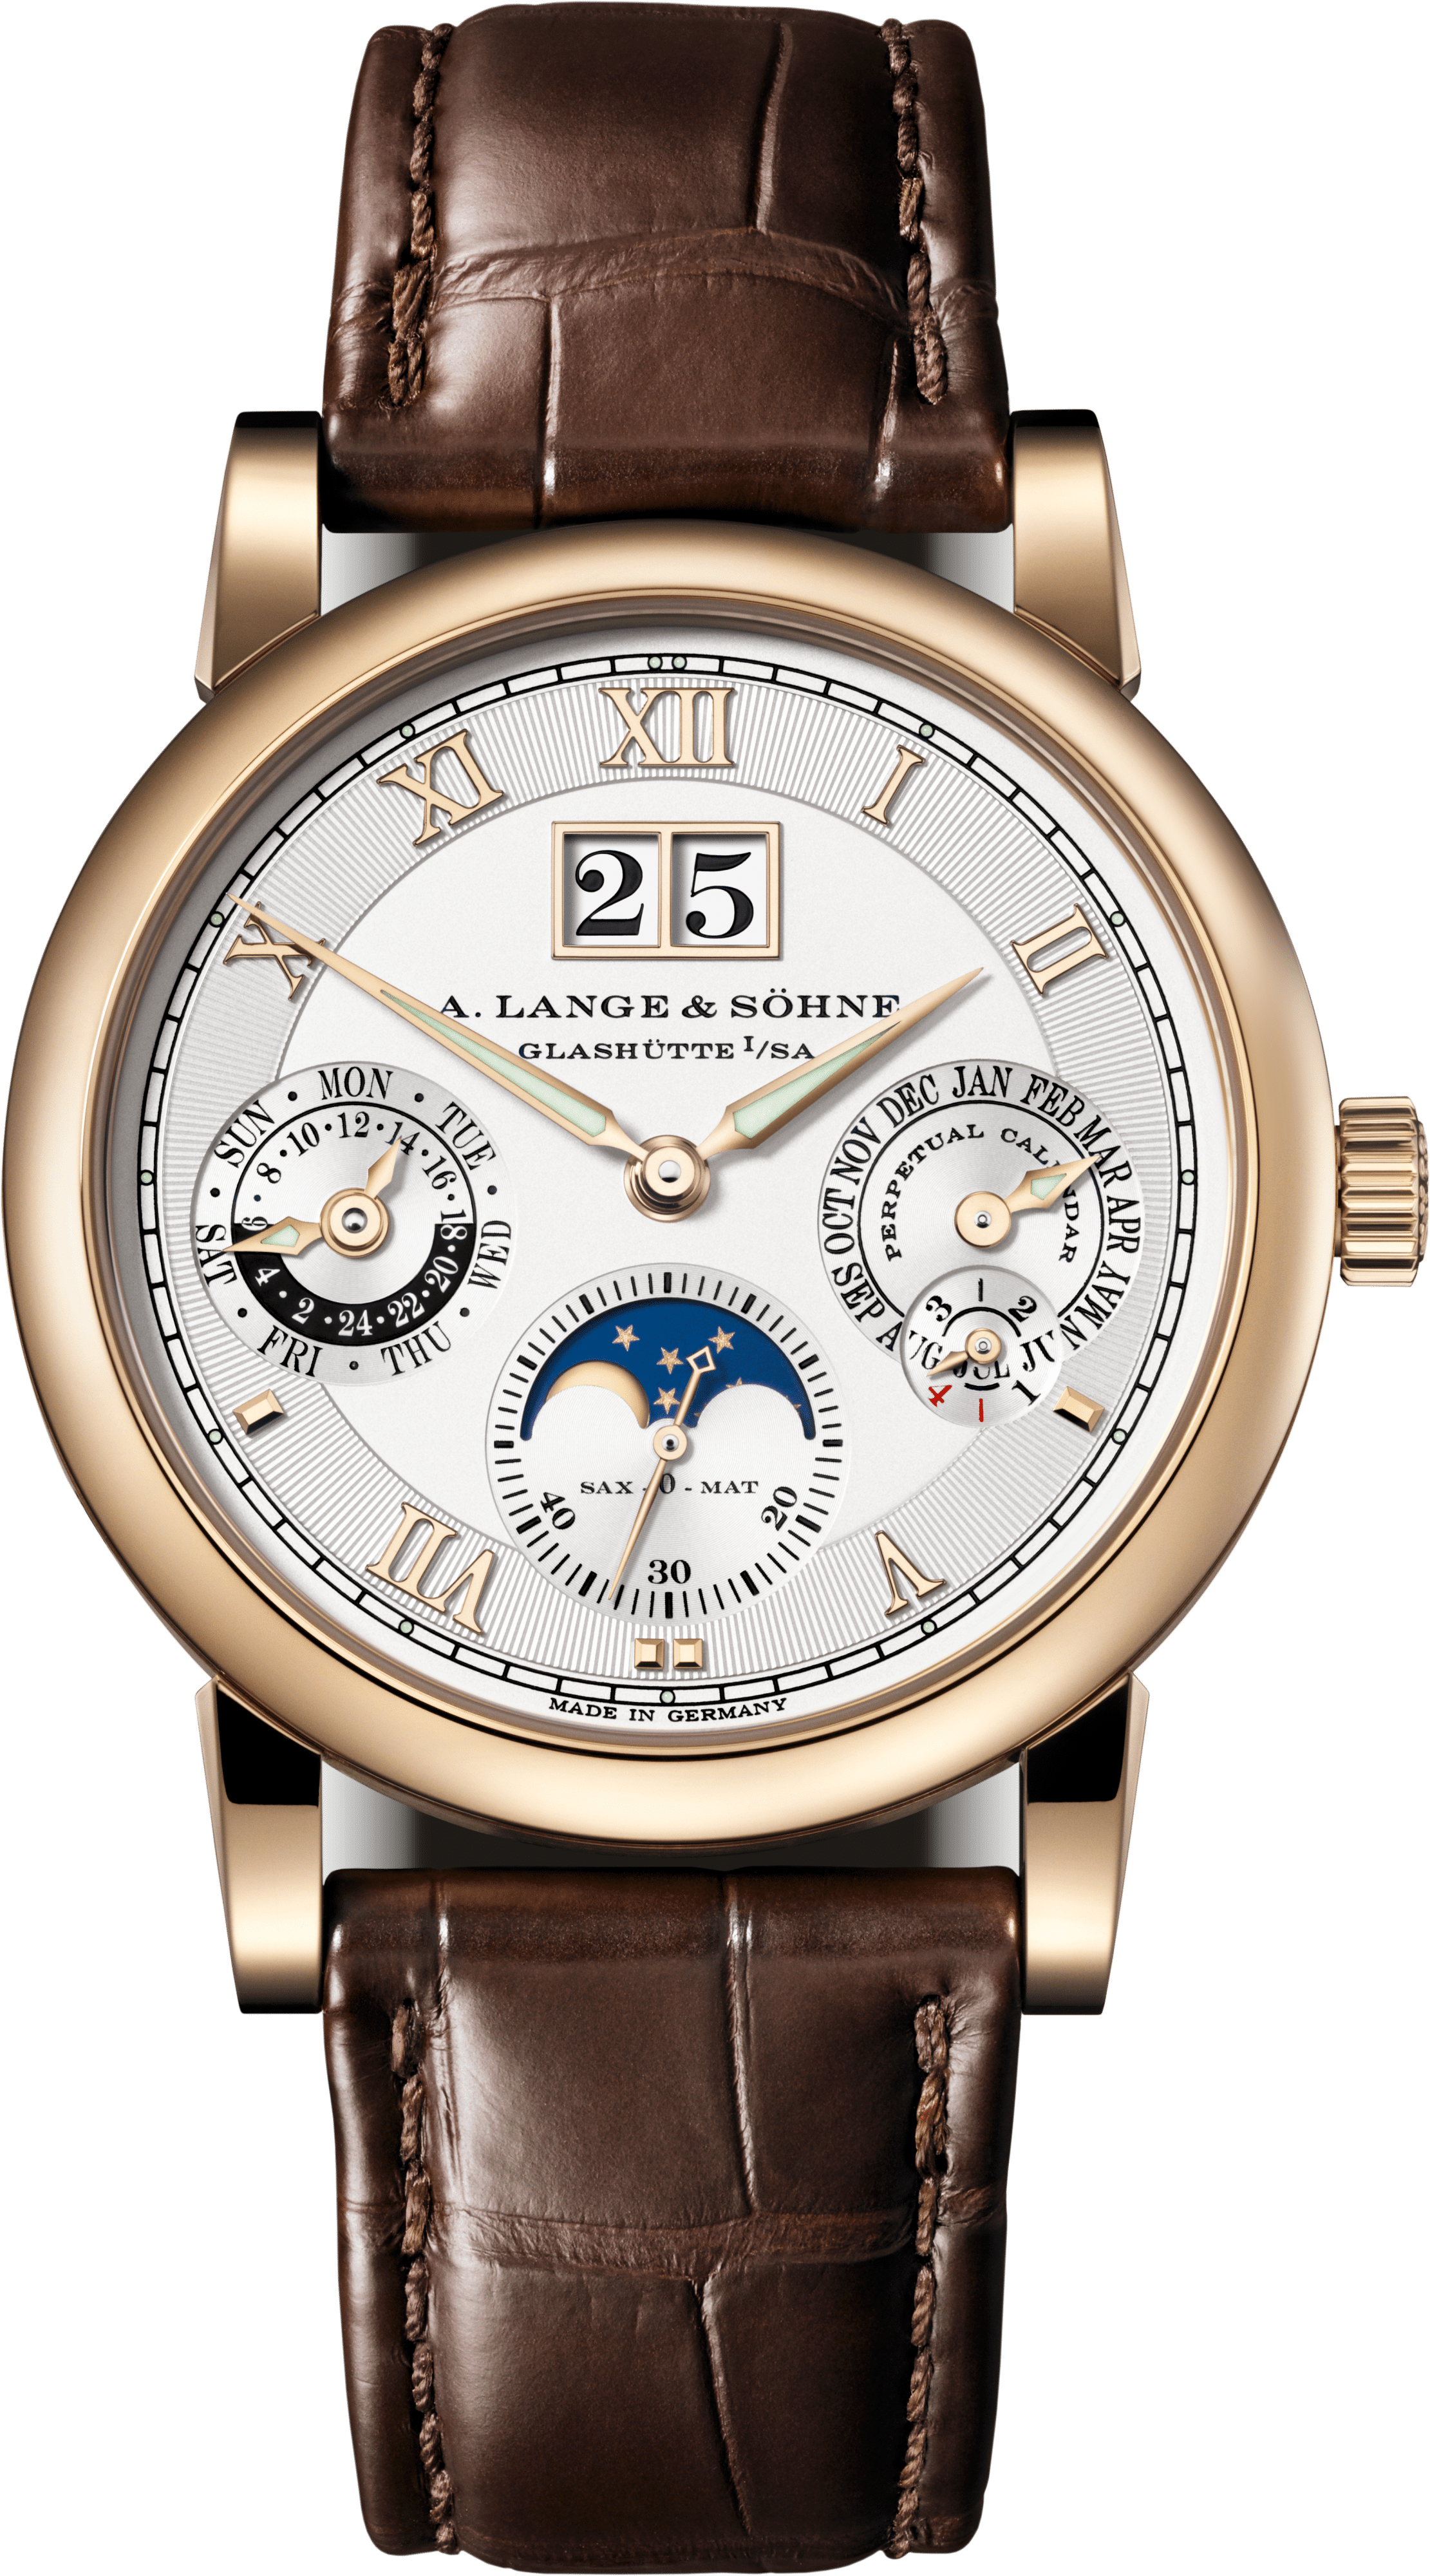 Fake Blancpain Watches